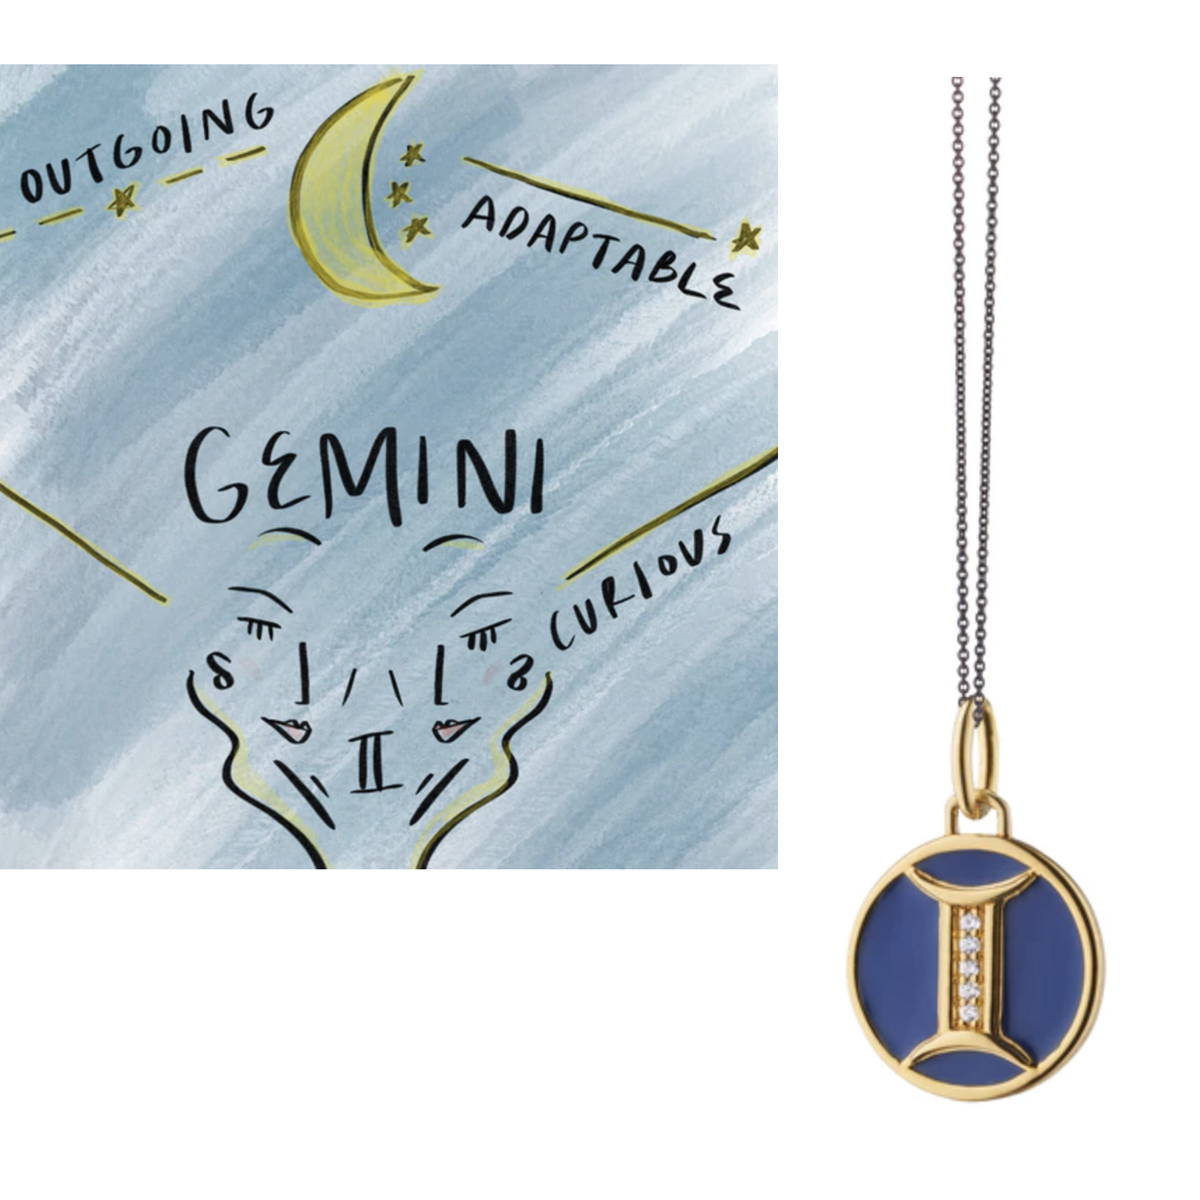 Gemini jewelry